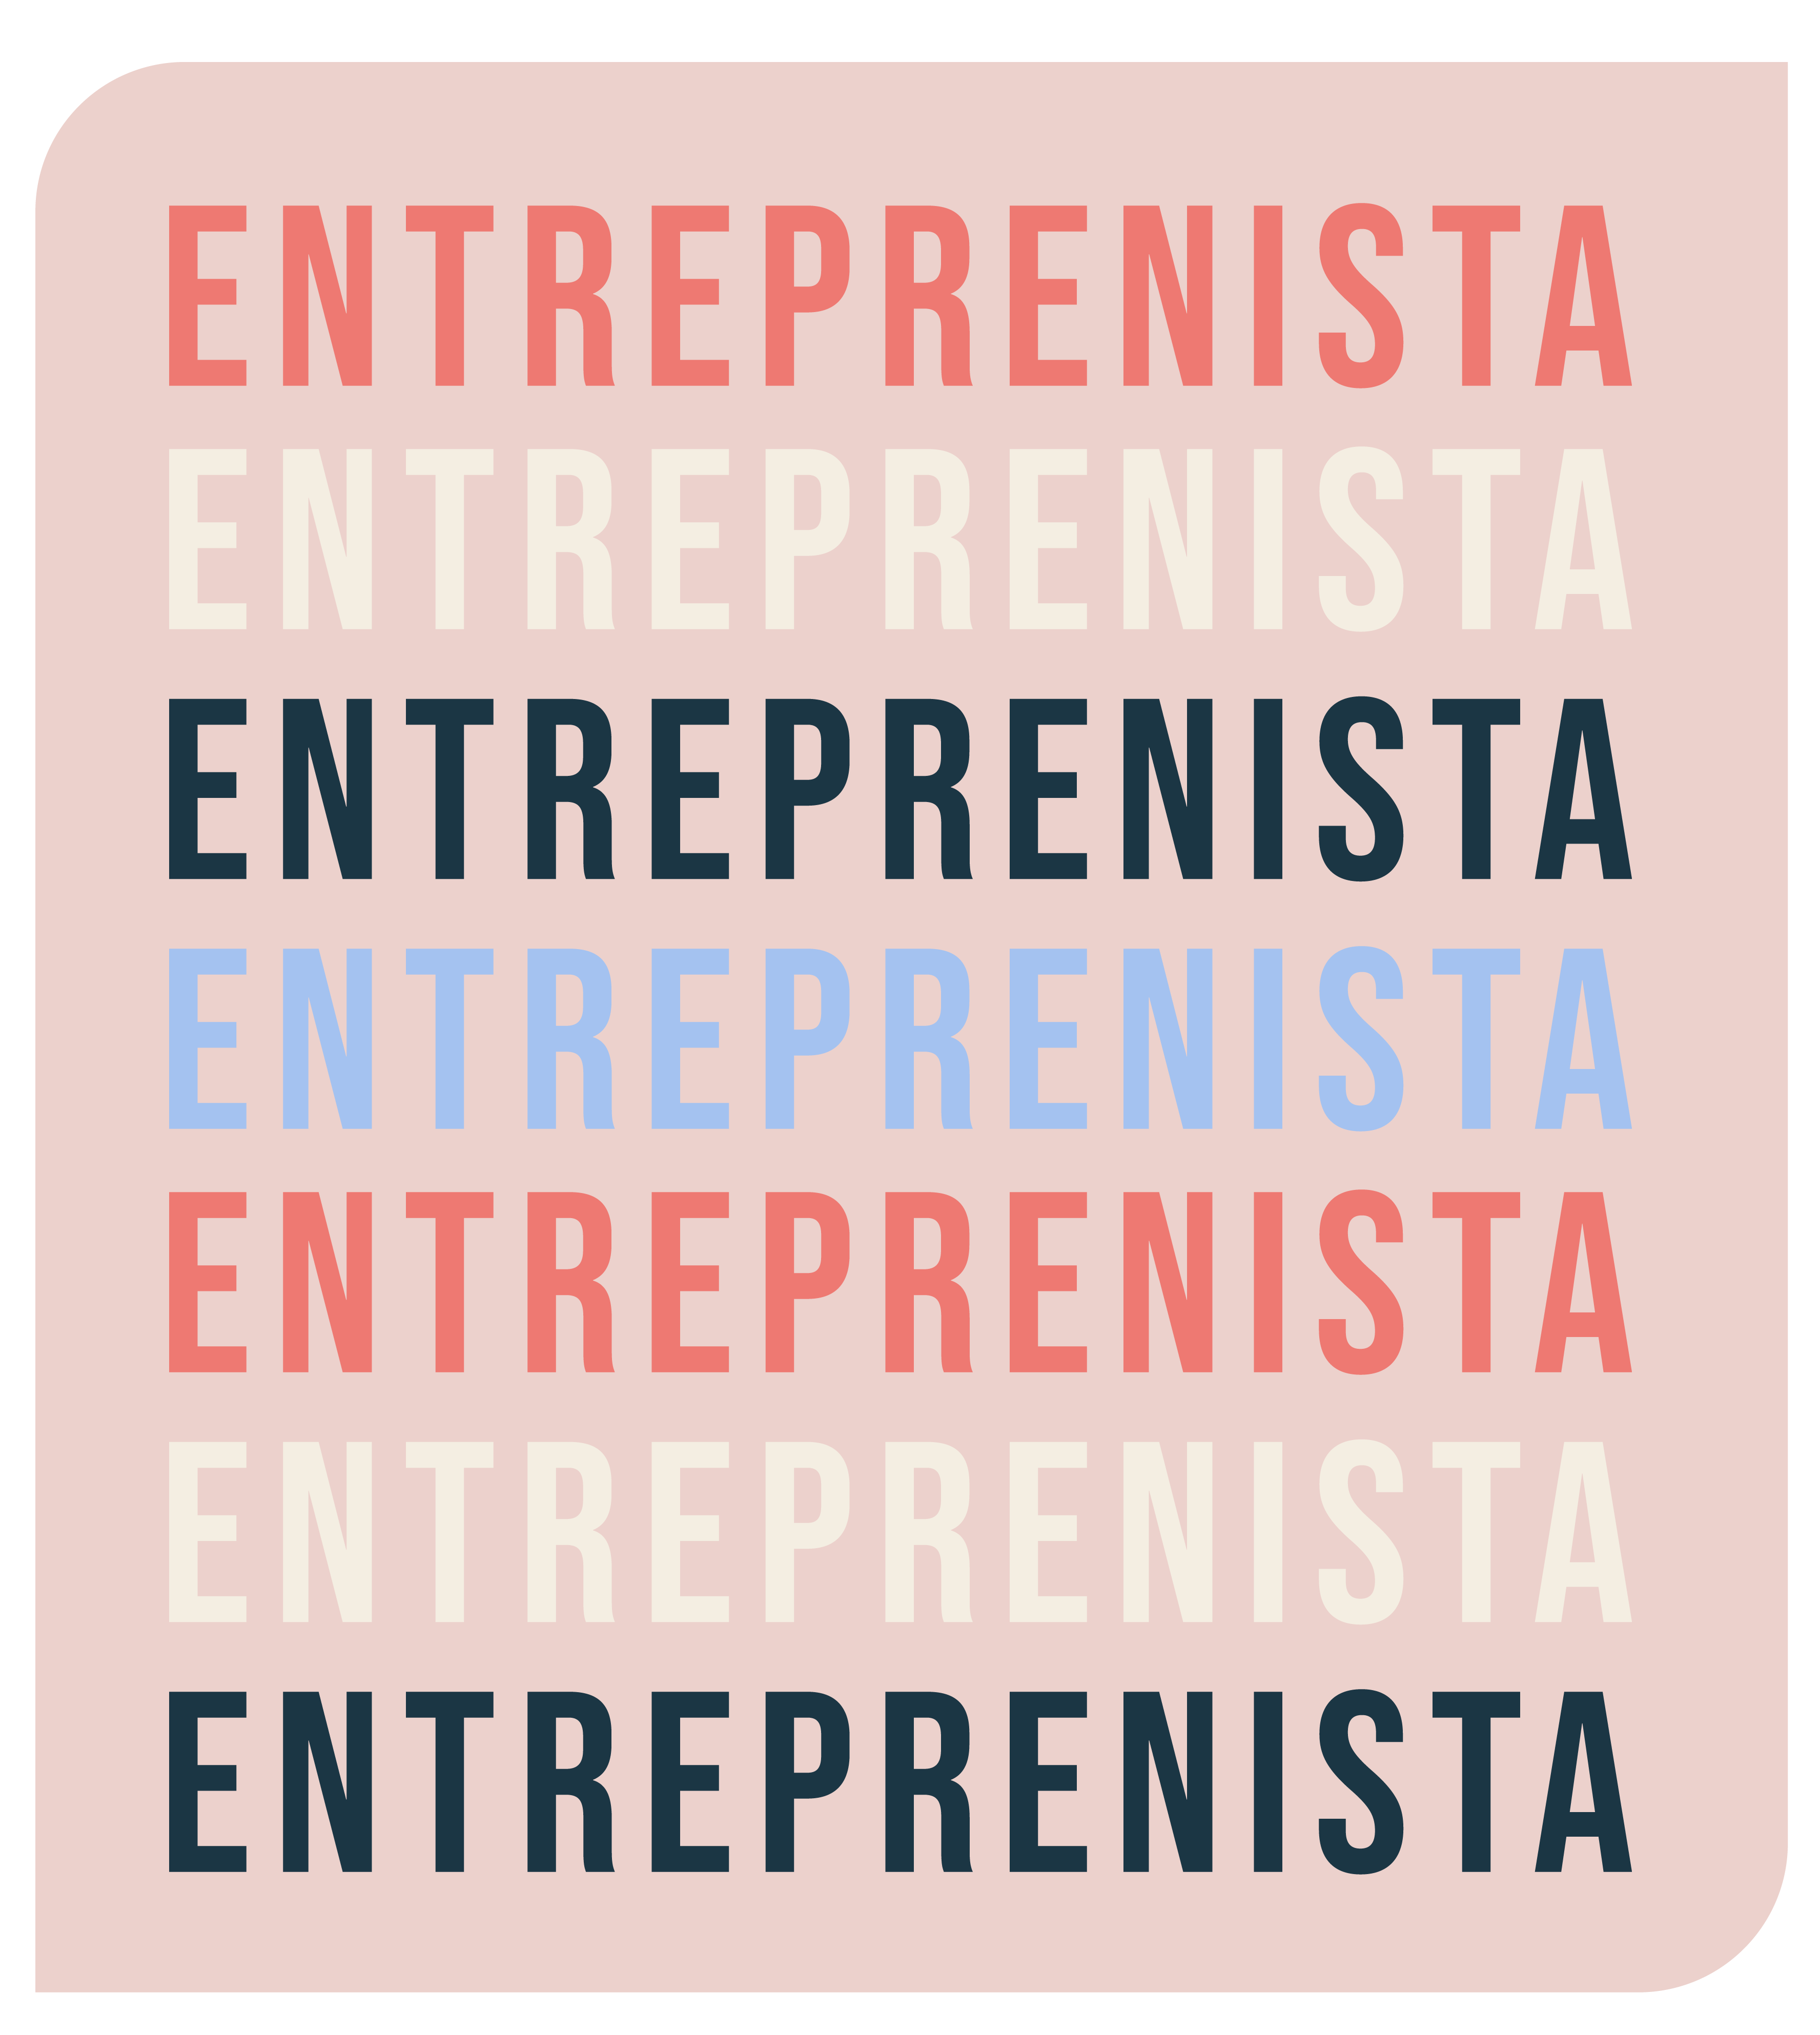 Blog - Entreprenista